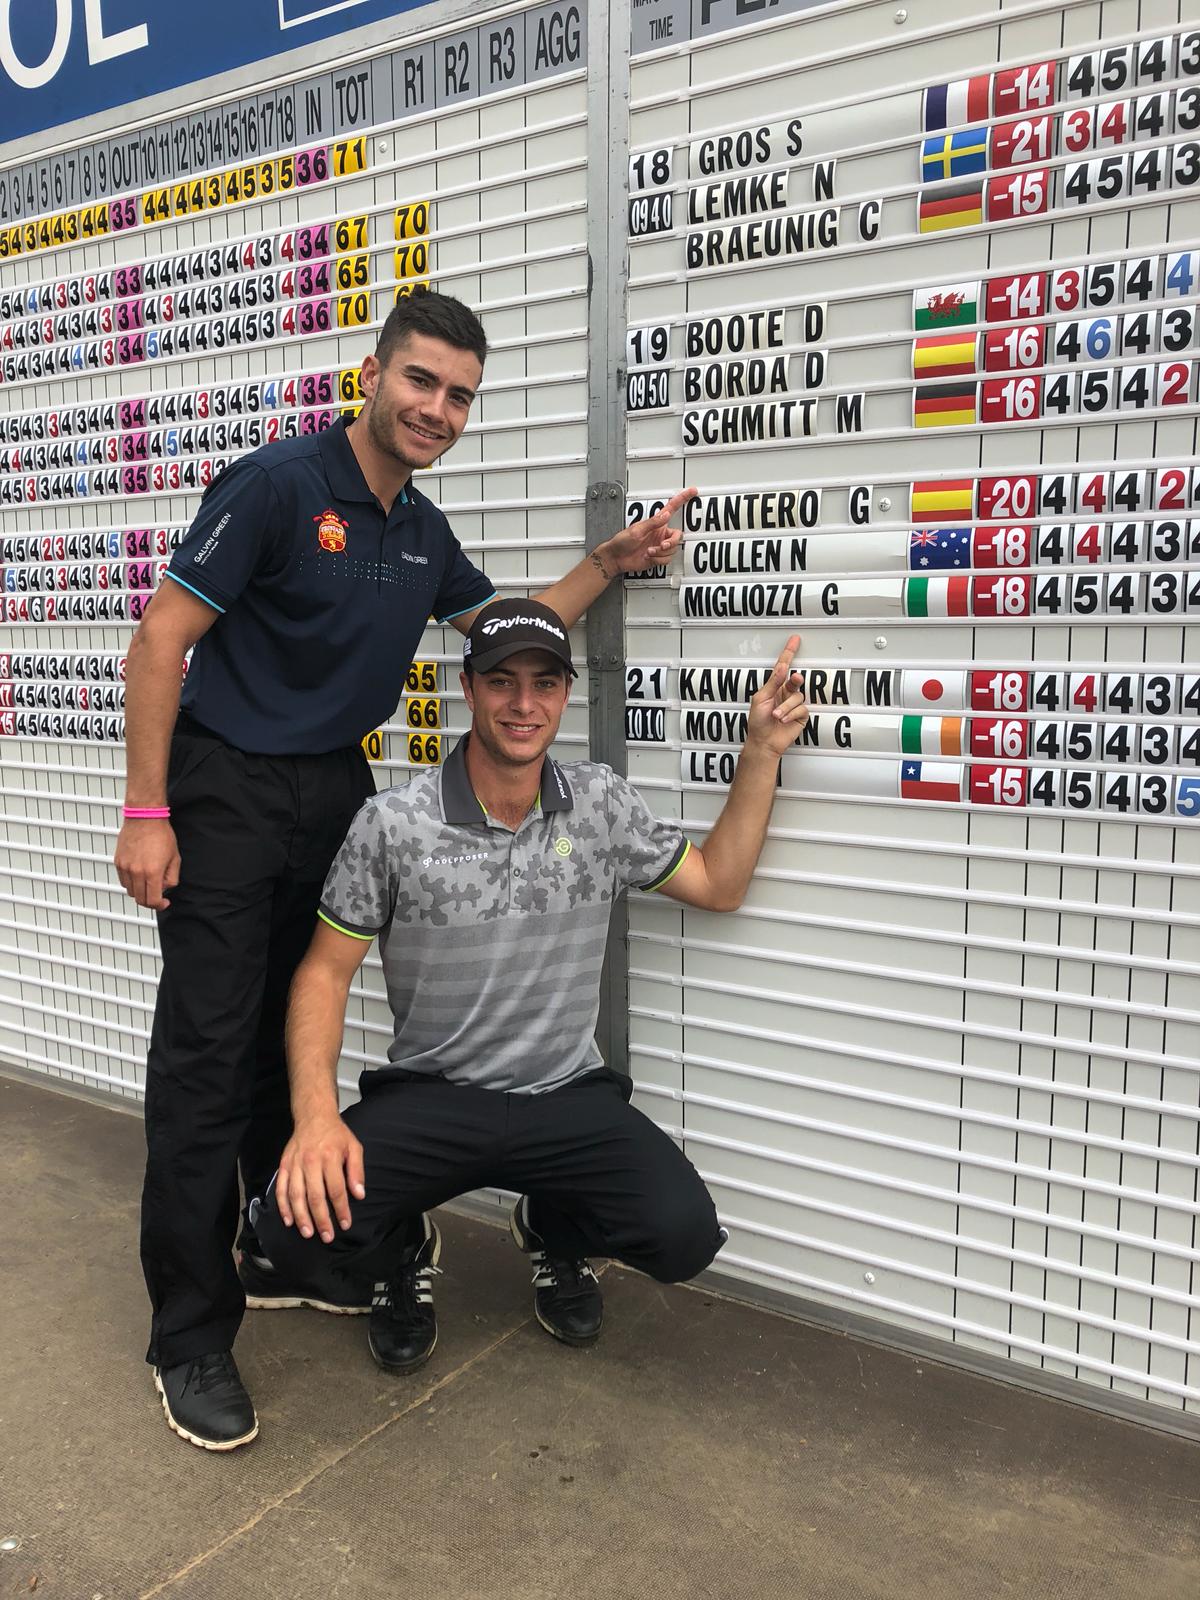 GolfMagic Tour blogger Guido Migliozzi earns 2019 European Tour card!